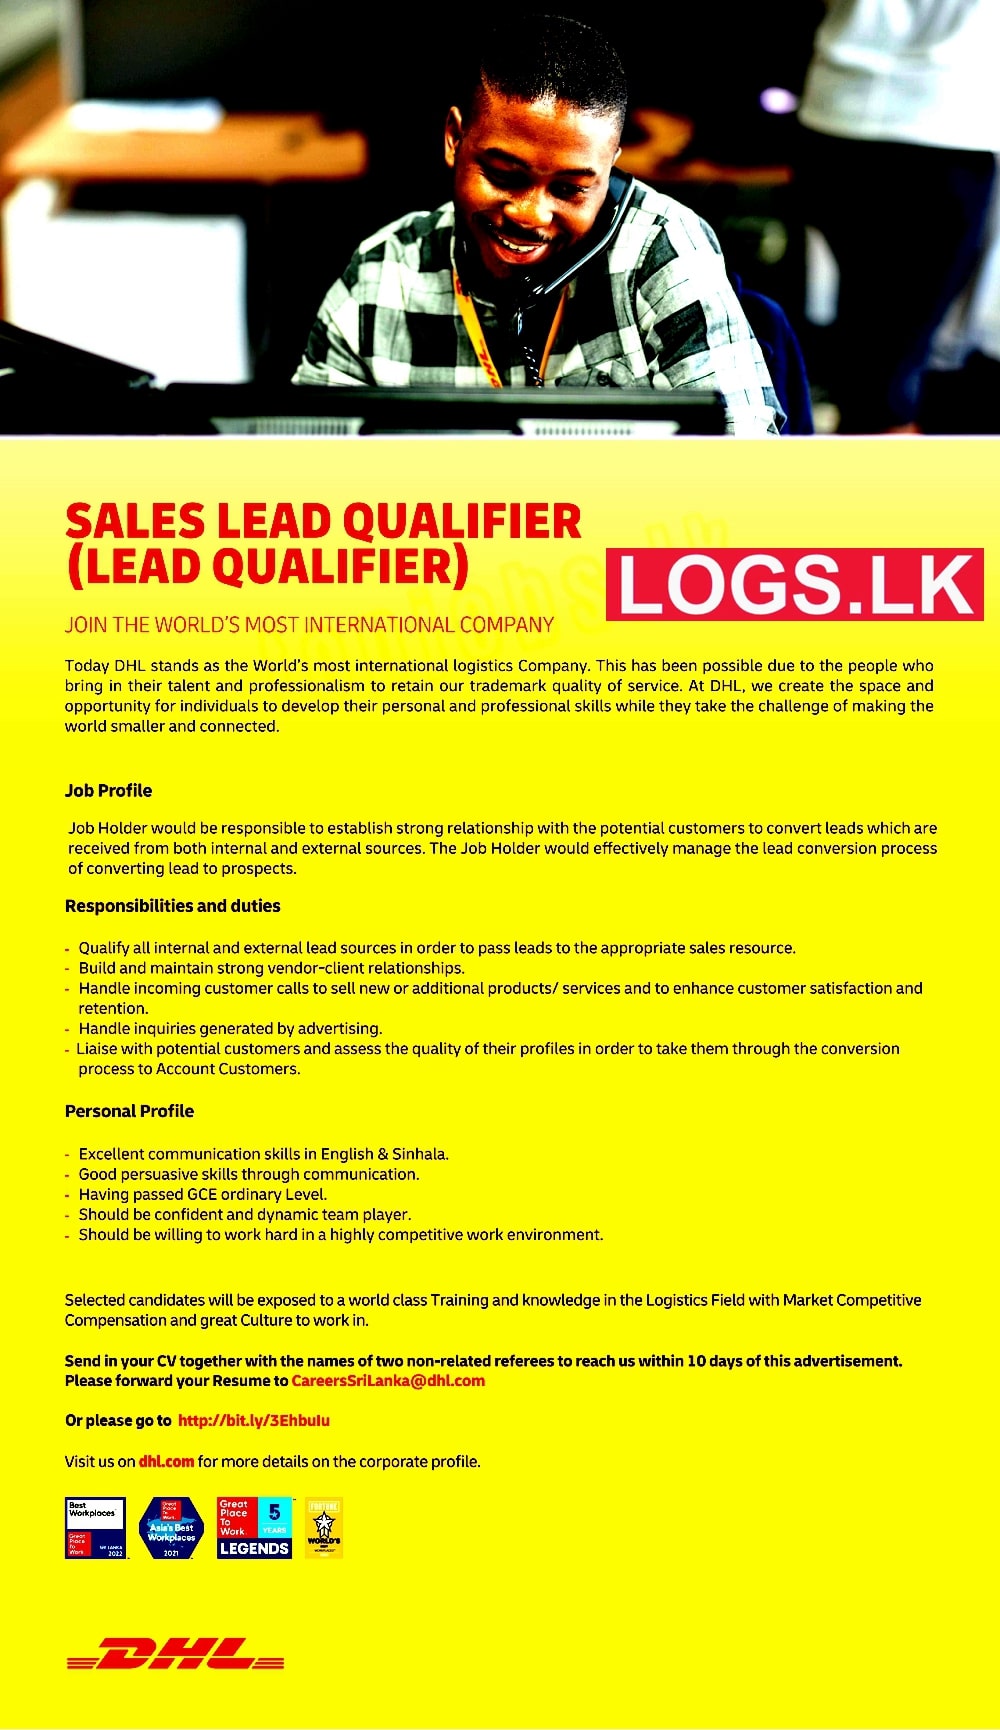 Sales Lead Qualifier Job Vacancy in DHL Sri Lanka Jobs Vacancies